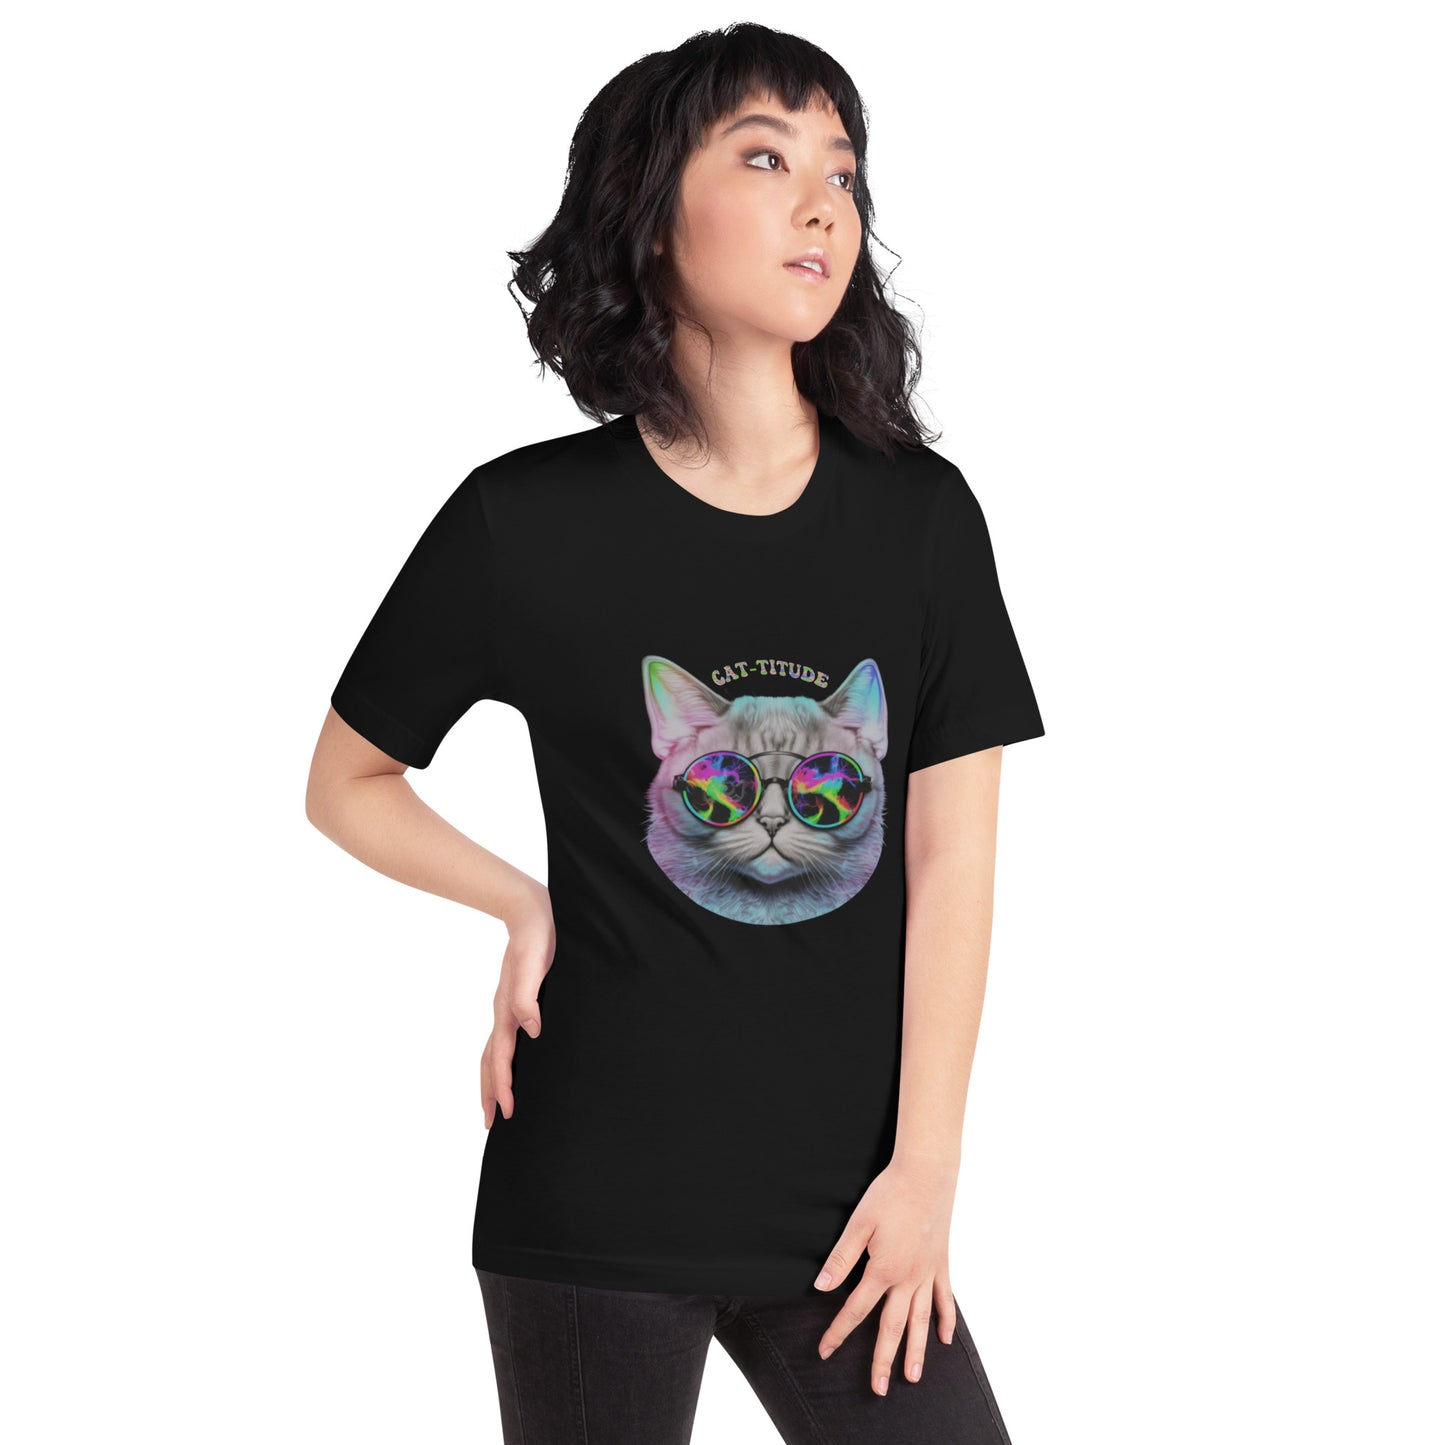 "Cat-Titude" T-Shirt